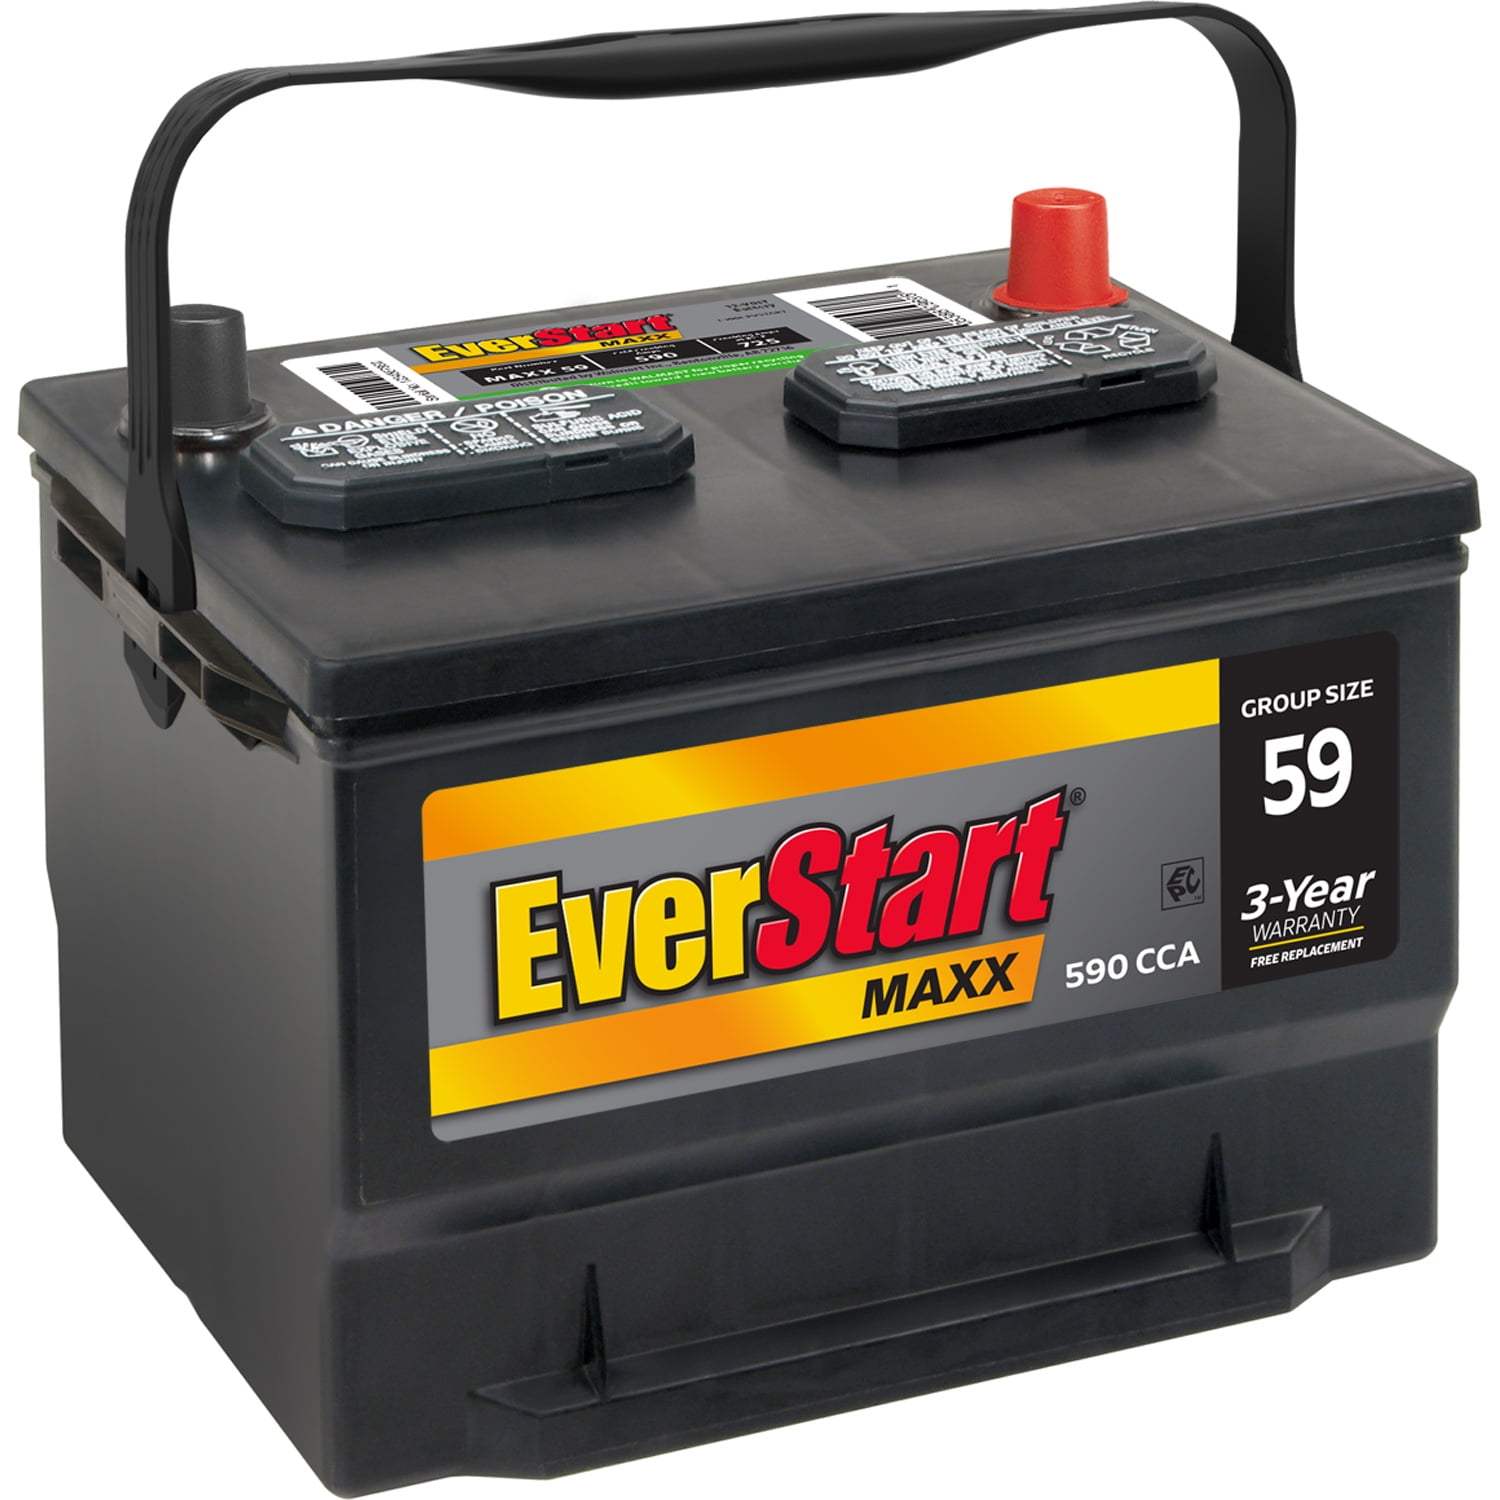 EverStart Maxx Lead Acid Automotive Battery, Groups Size 59 (12 Volt/590 CCA)